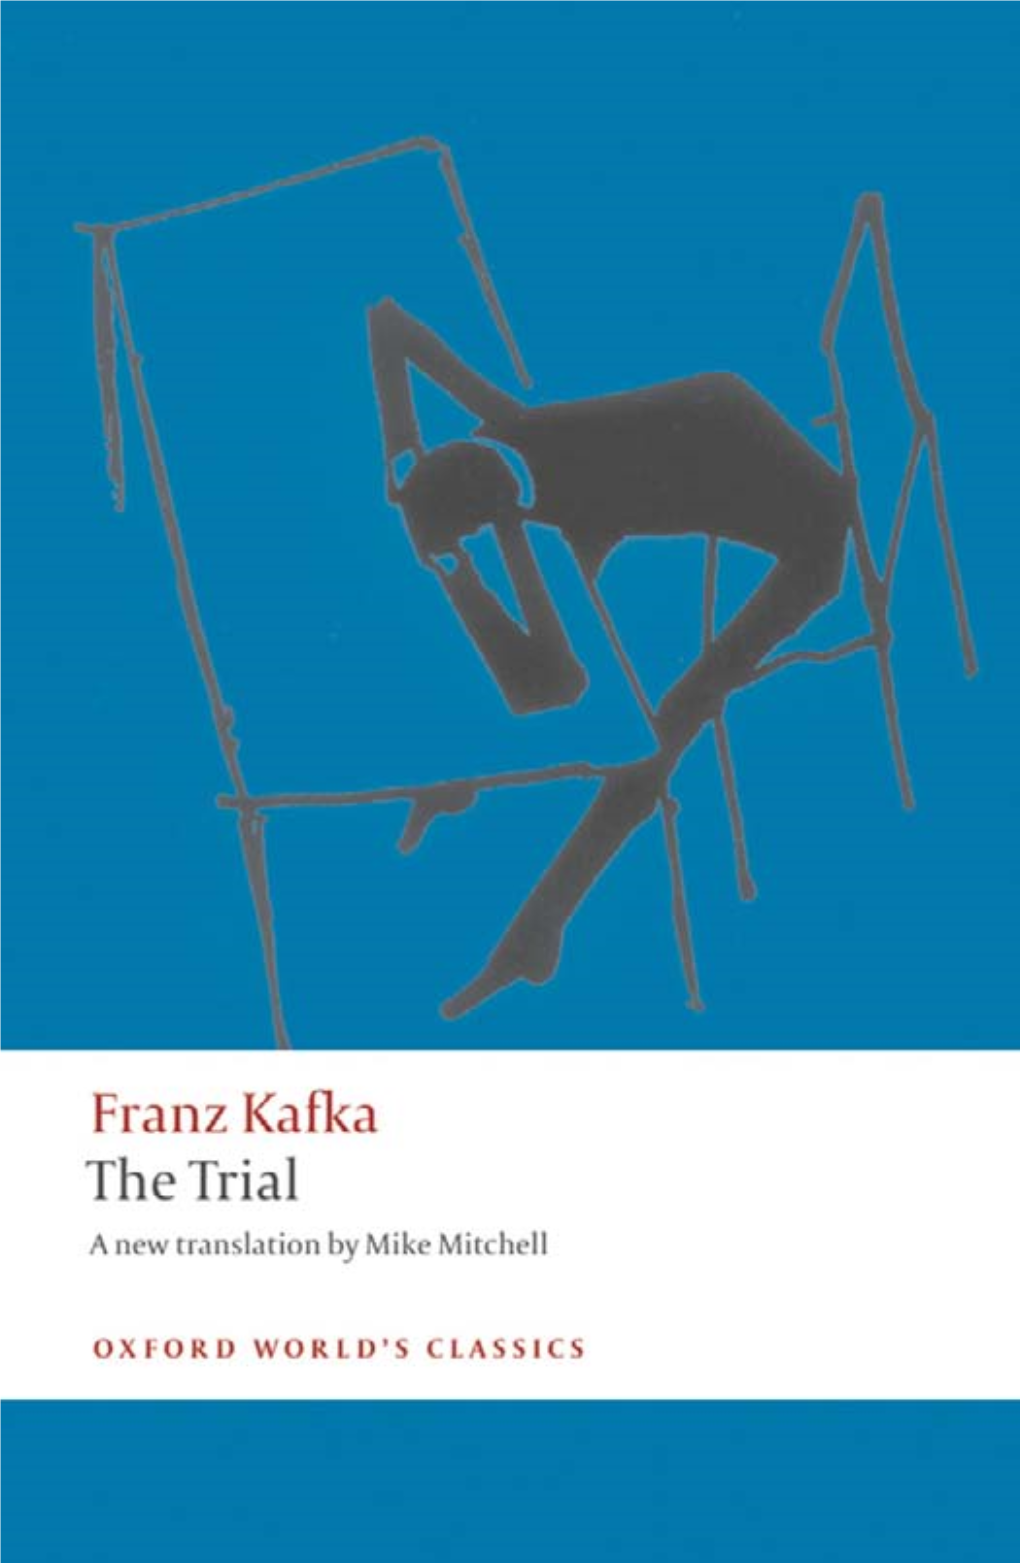 Franz Kafka, the Trial